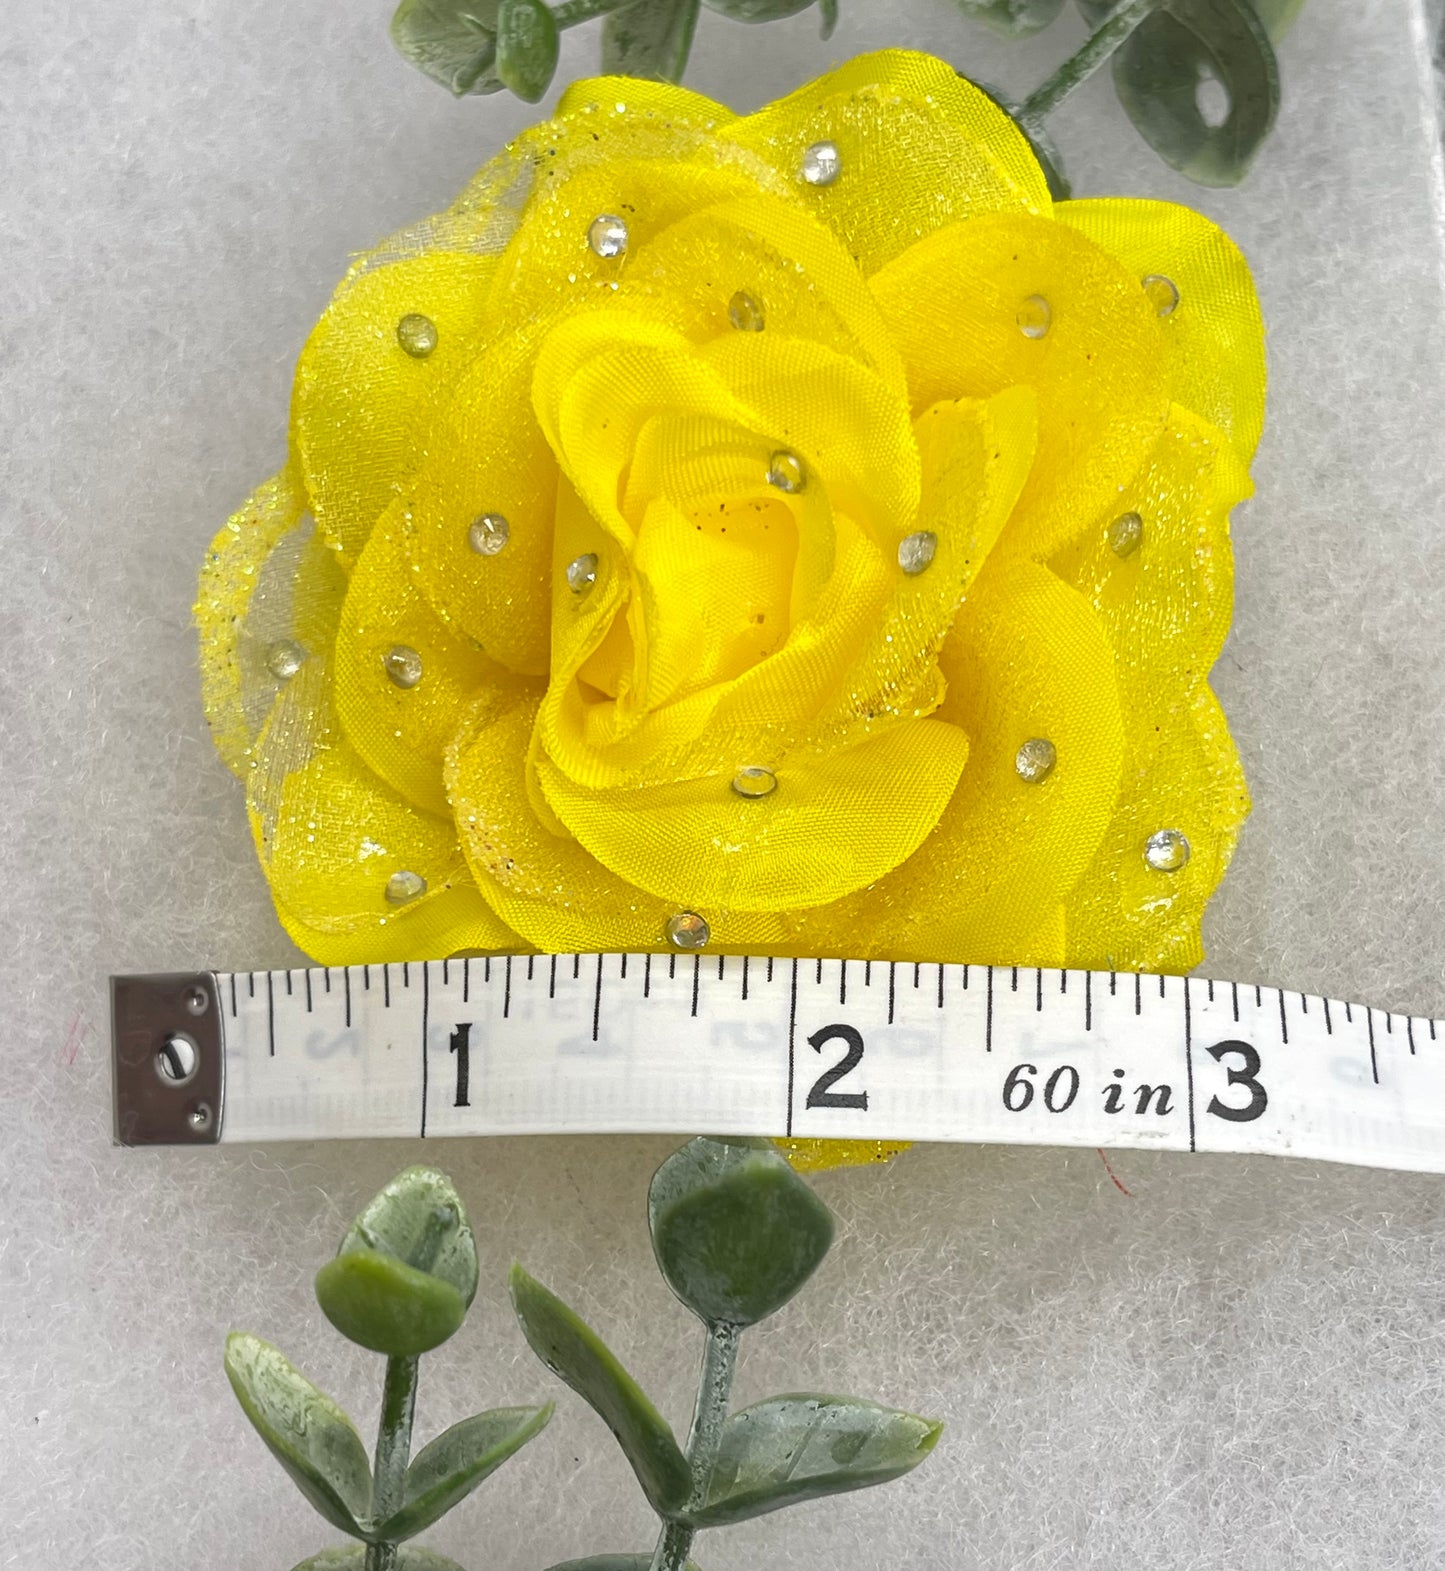 Yellow Rose flower crystal rhinestone embellished alligator clip approximately 3.0” formal hair accessory wedding